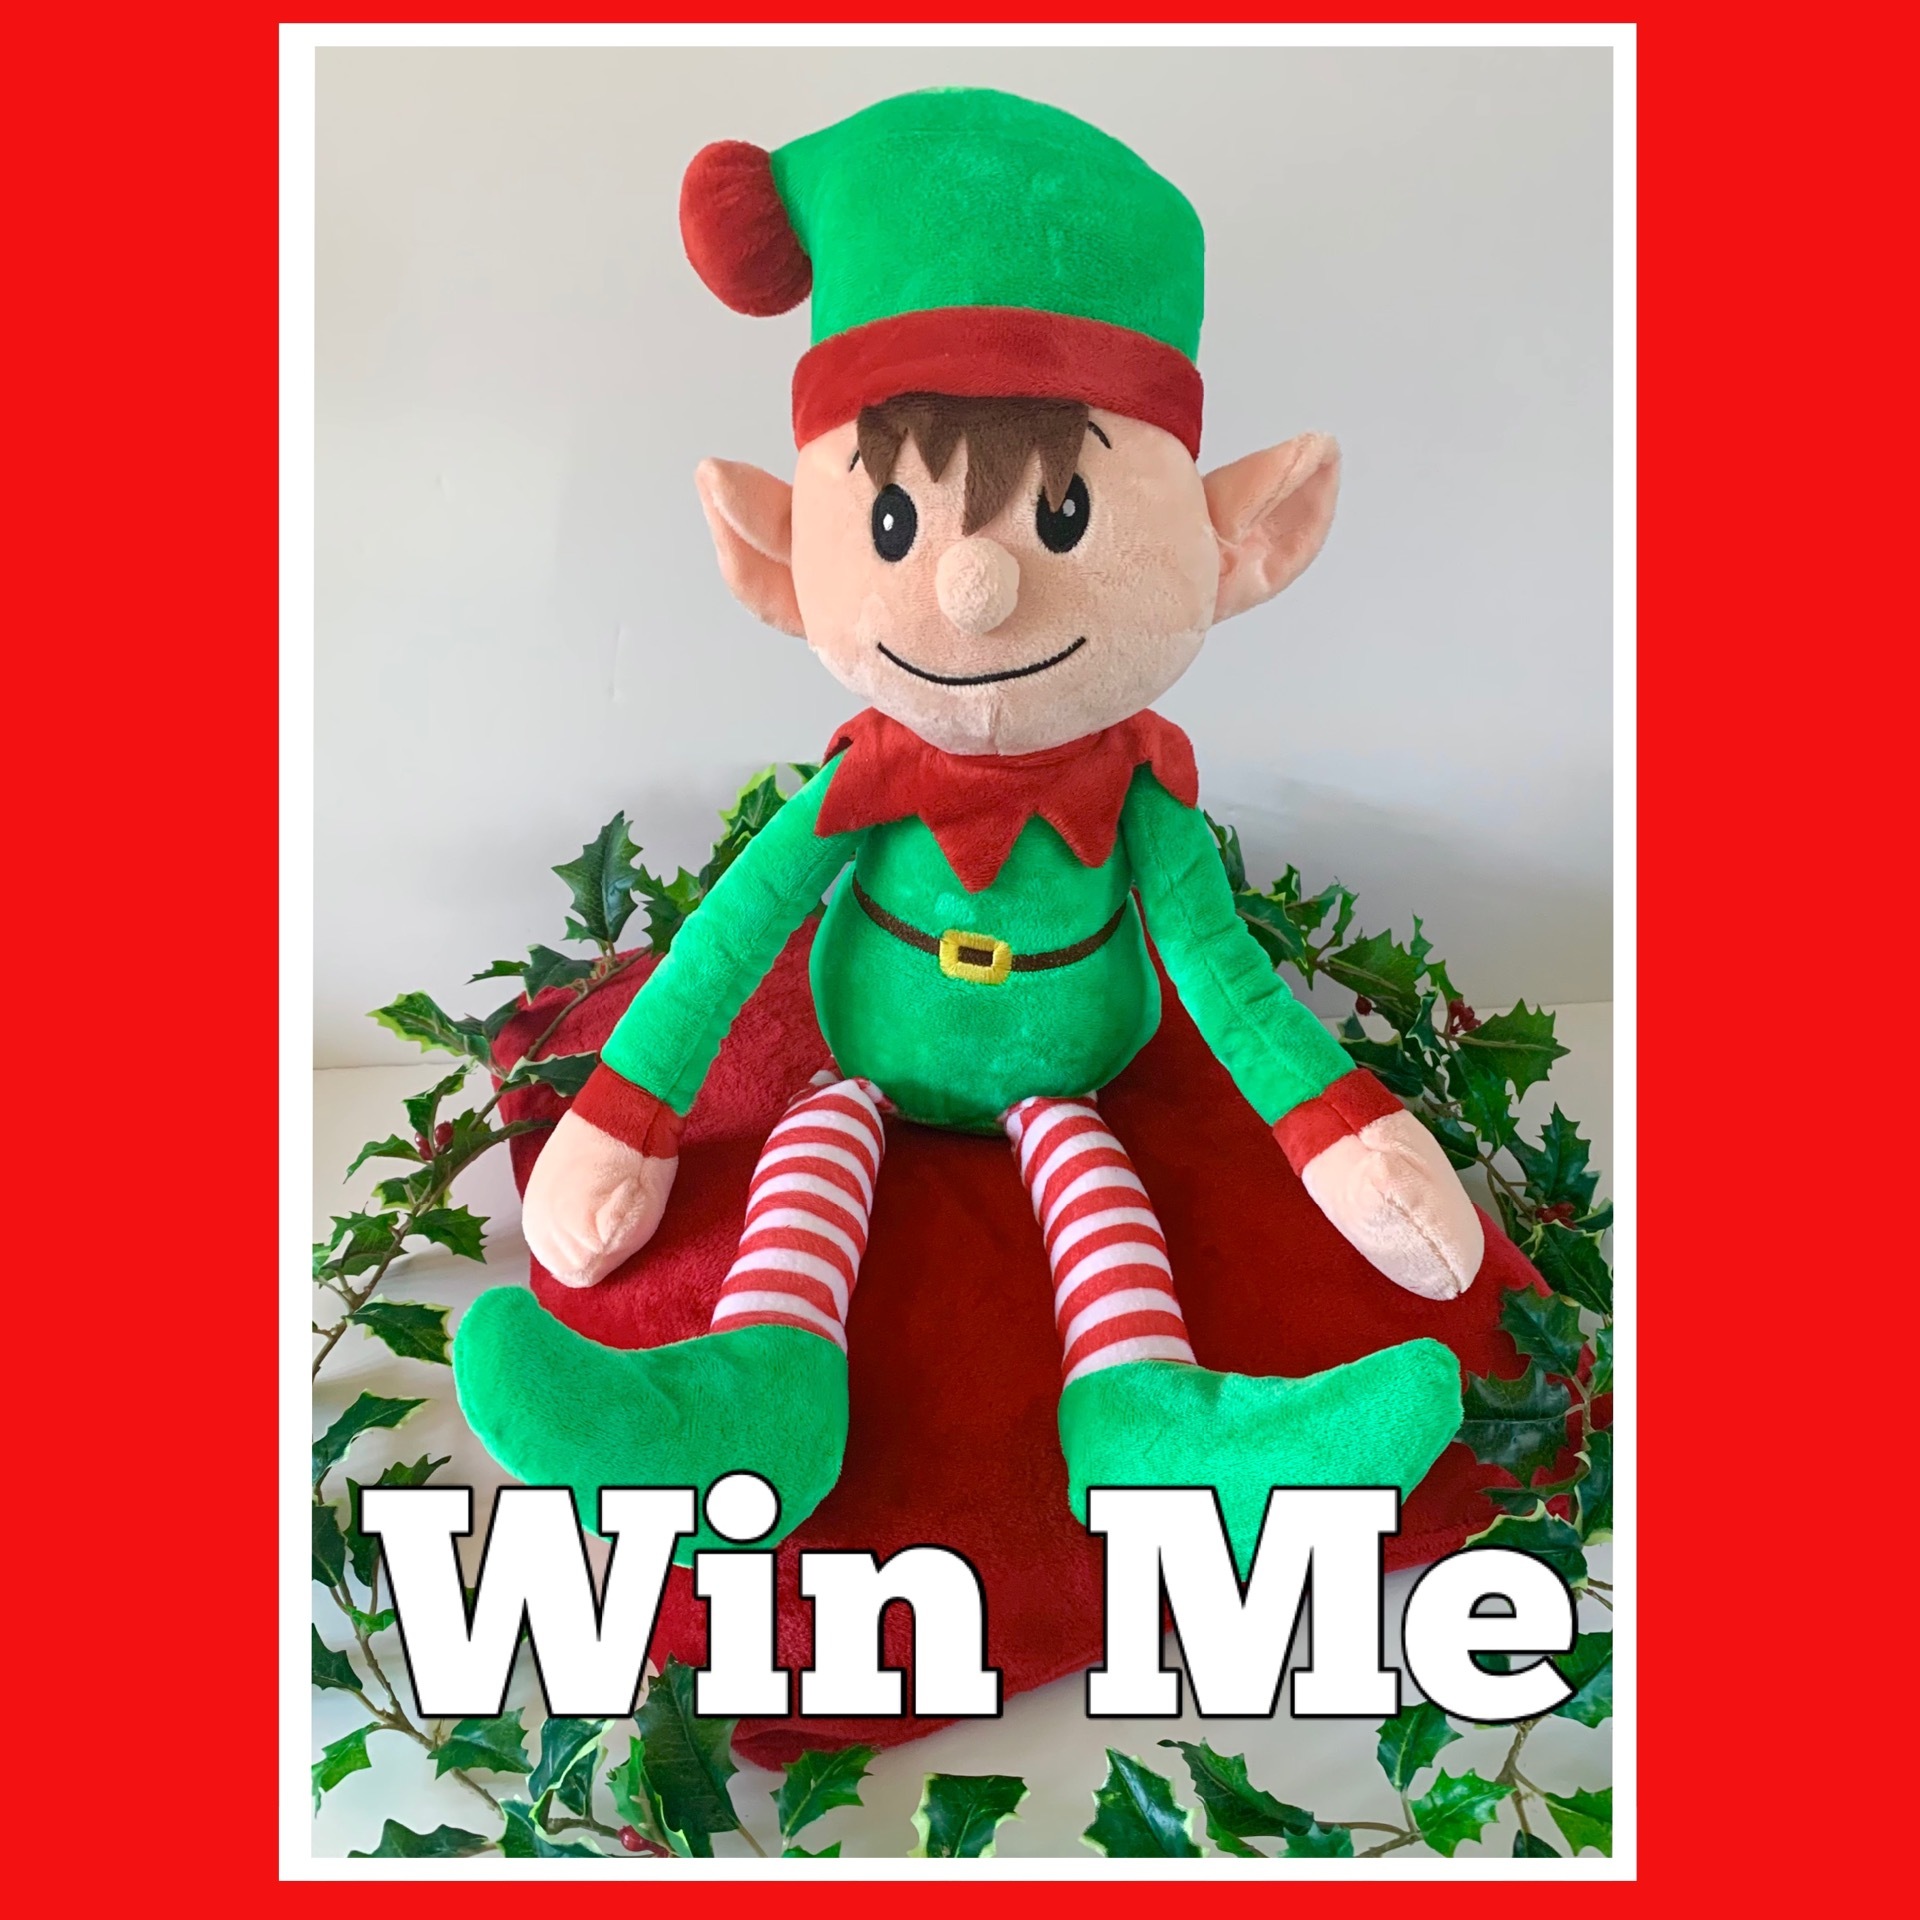 Win a Jumbo Elf Christmas Competition